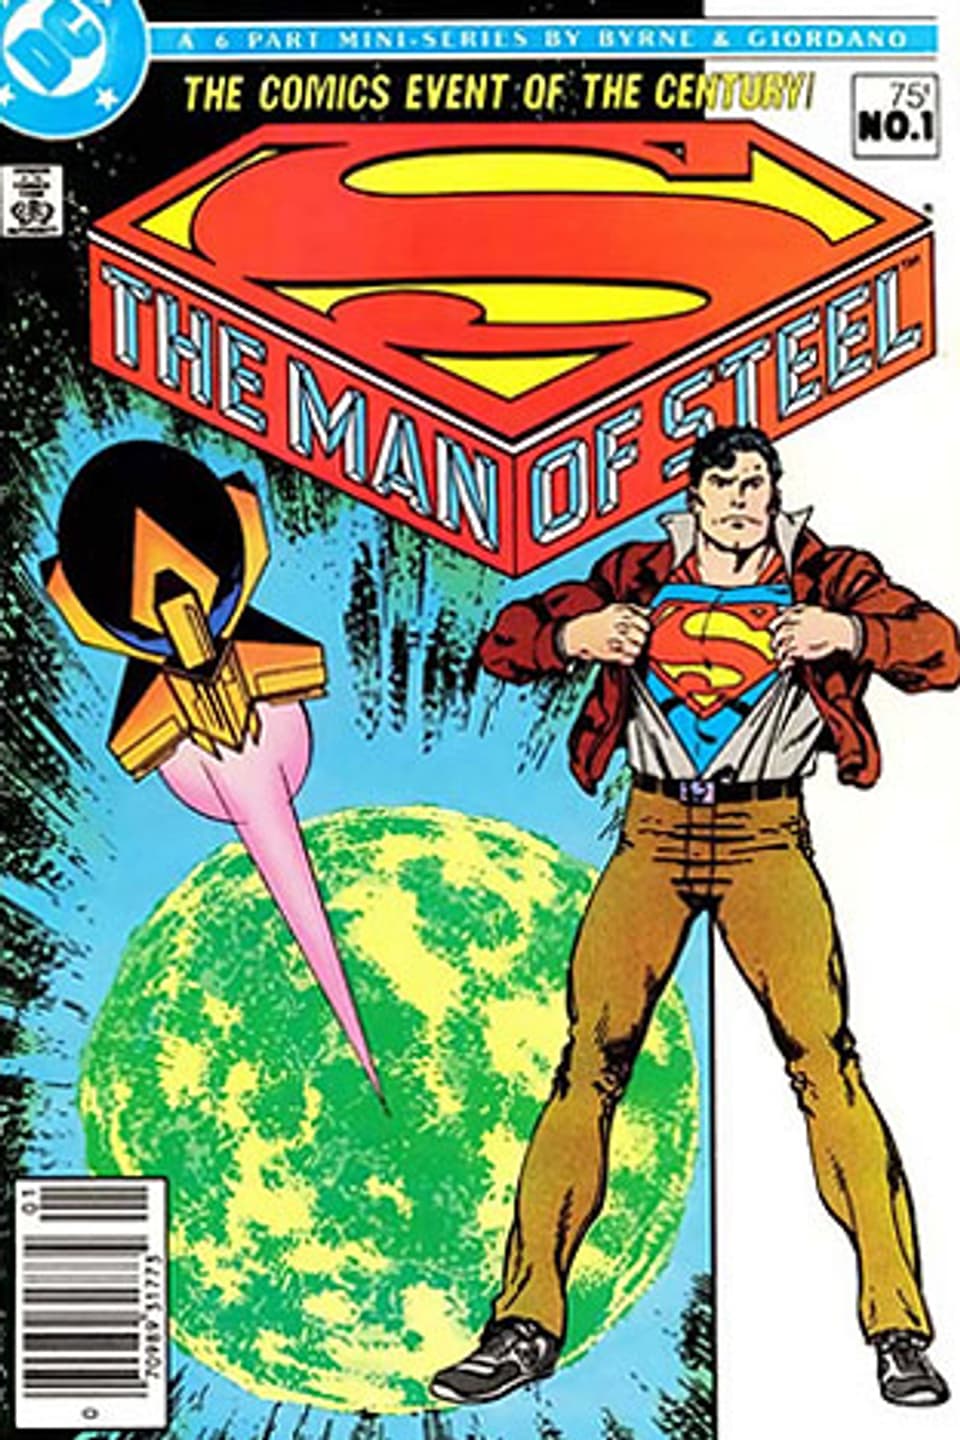 Cover eines Comics mit Superman. 